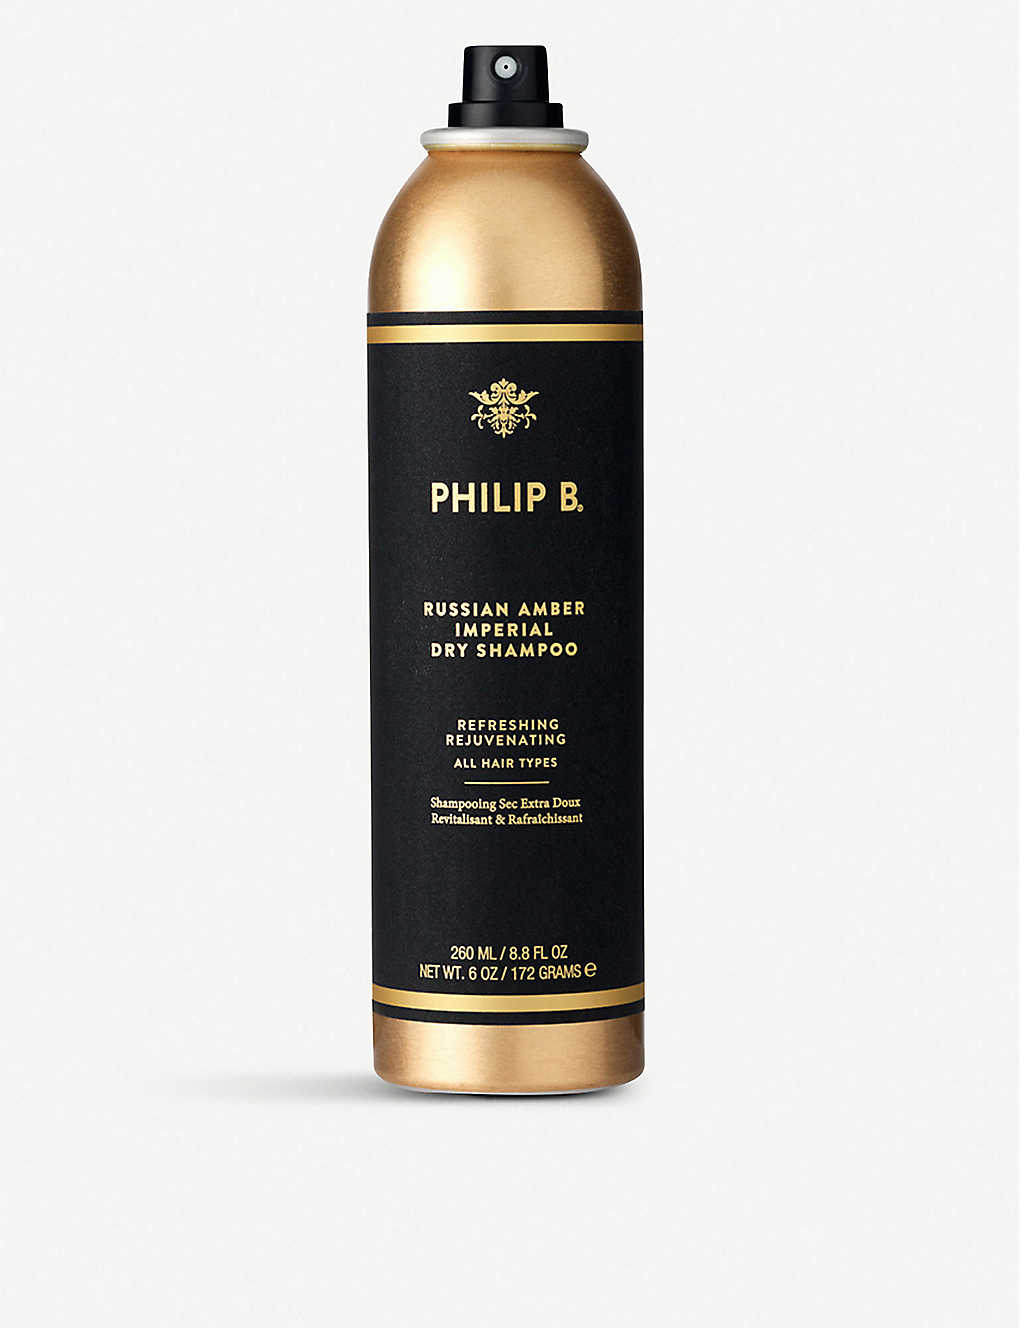 Philip B Russian Amber Dry Shampoo 260ml